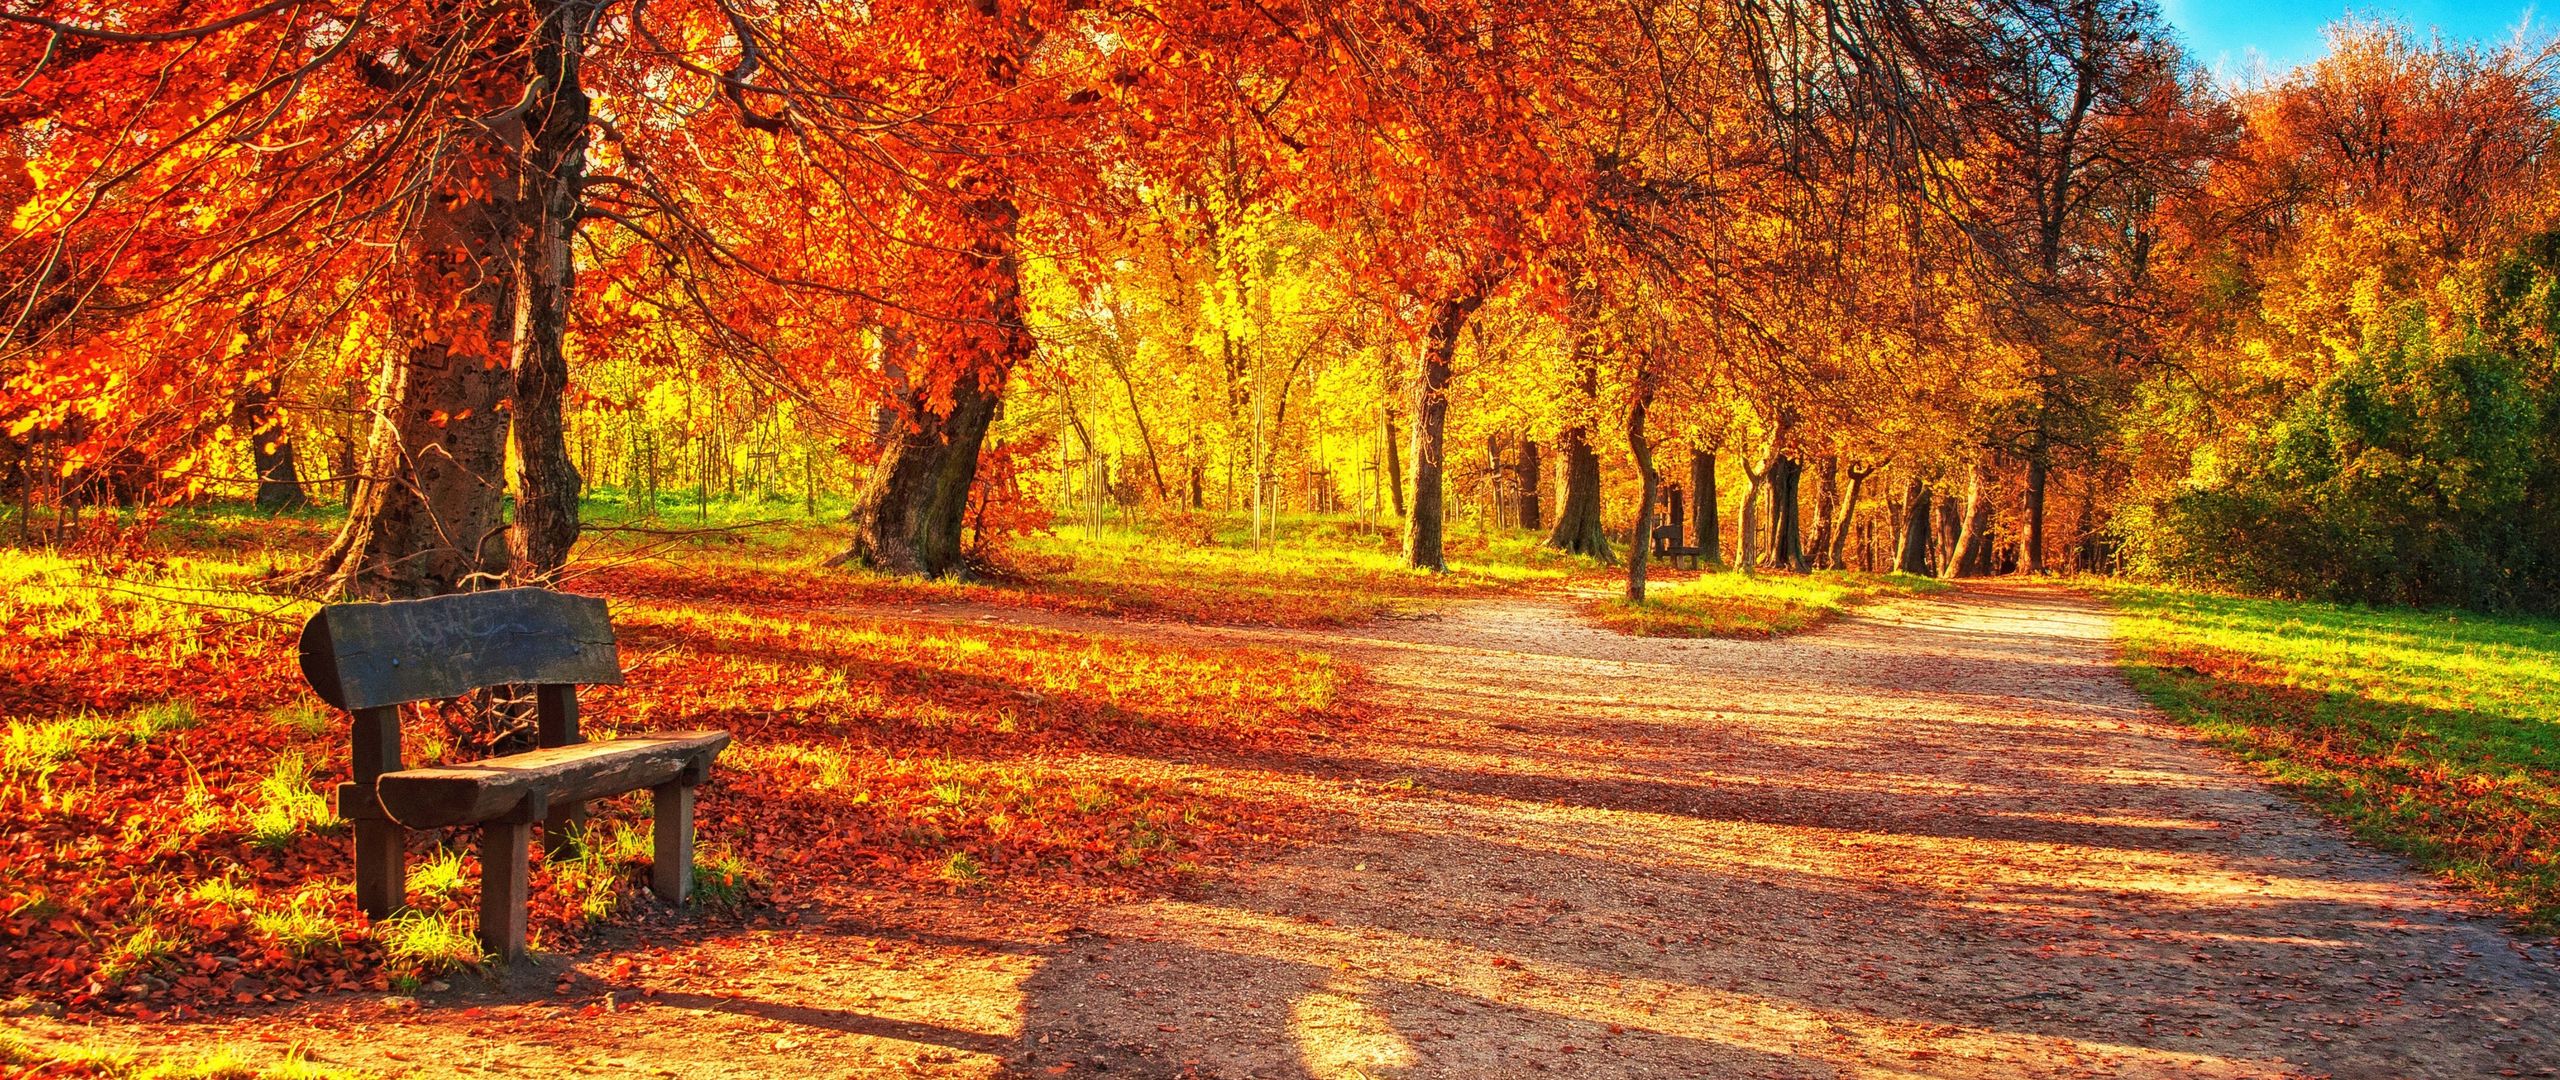 Download wallpaper 2560x1080 bench, autumn, park, foliage dual wide 1080p hd  background